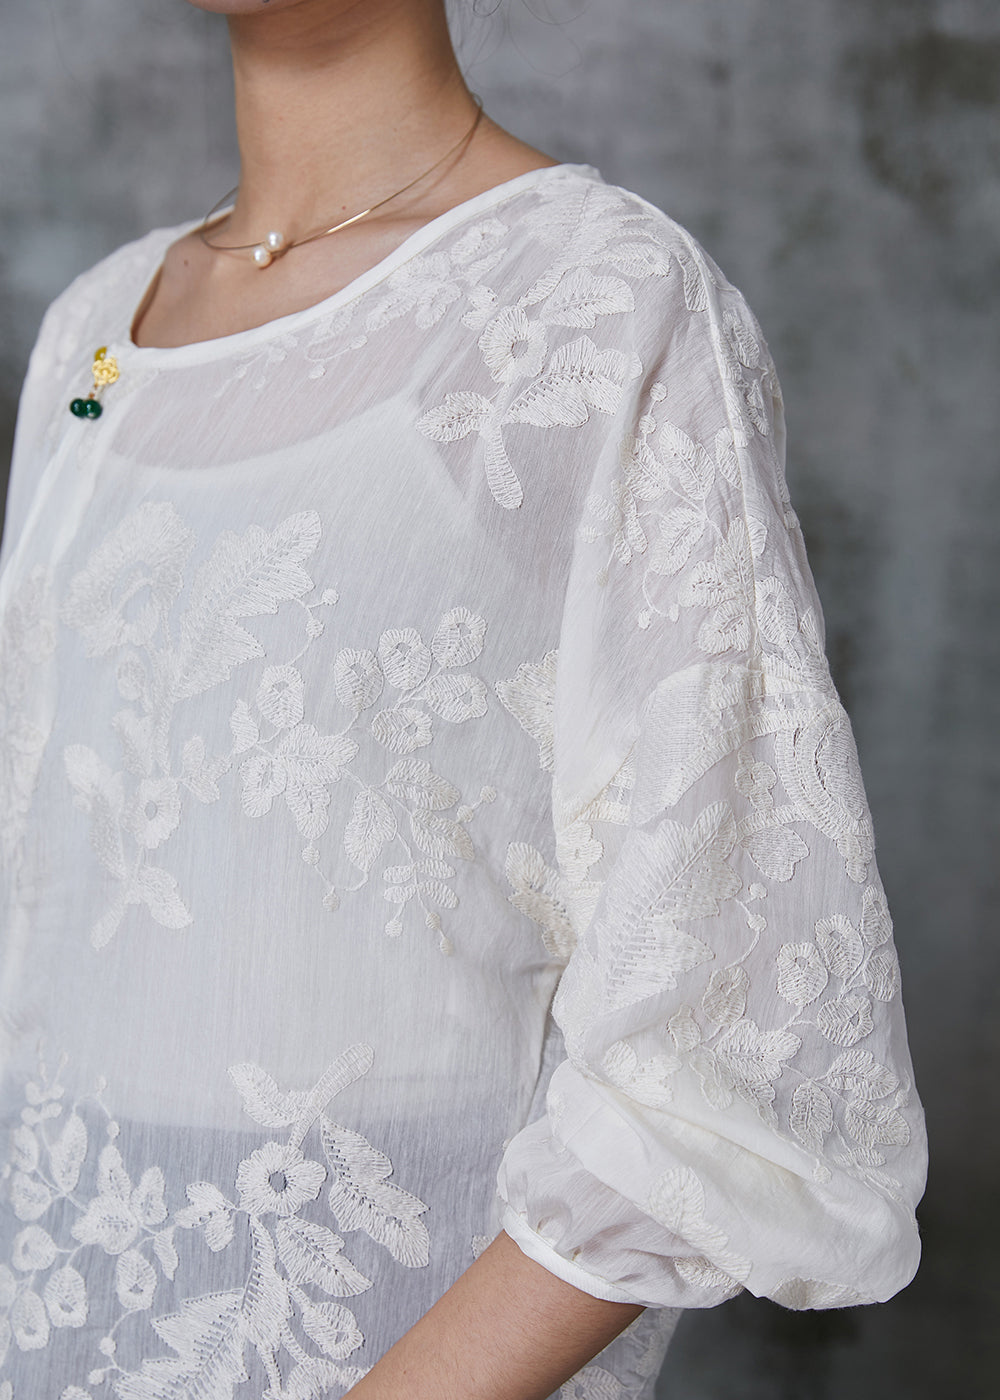 Handmade White Embroidered Cotton Shirt Top Summer